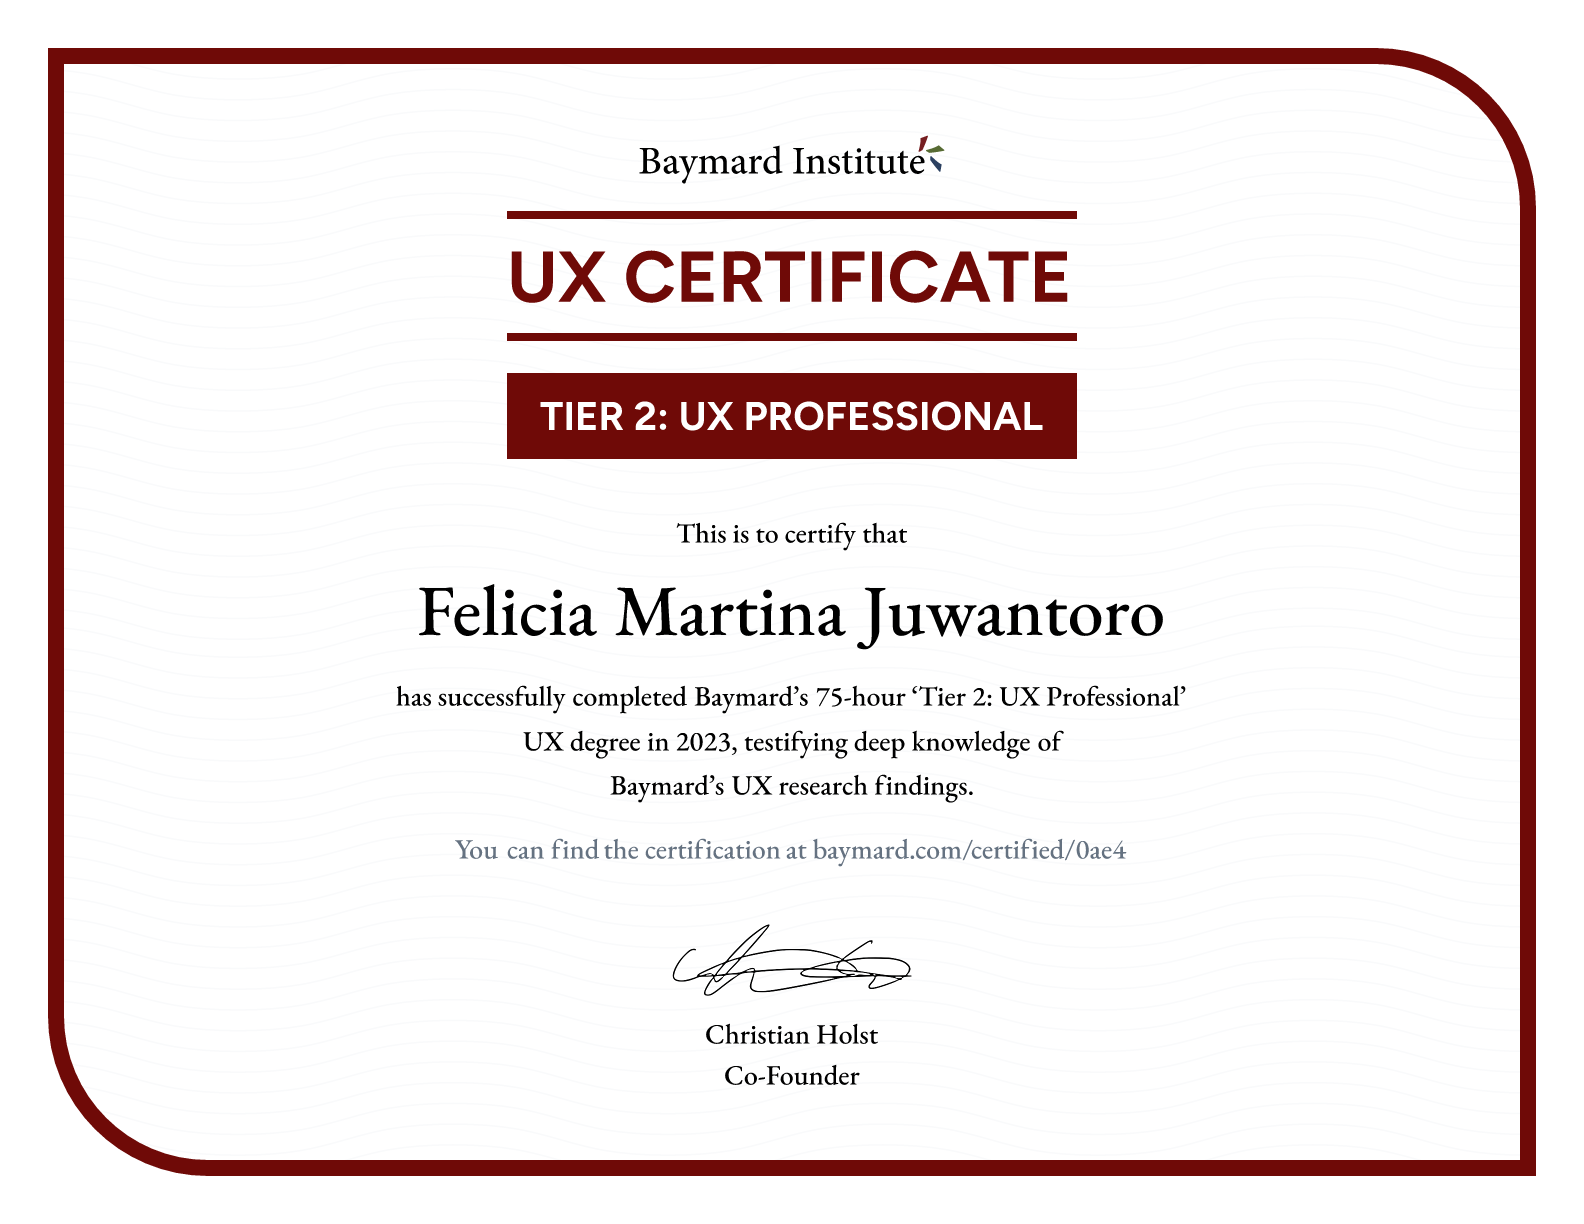 Felicia Martina Juwantoro’s certificate